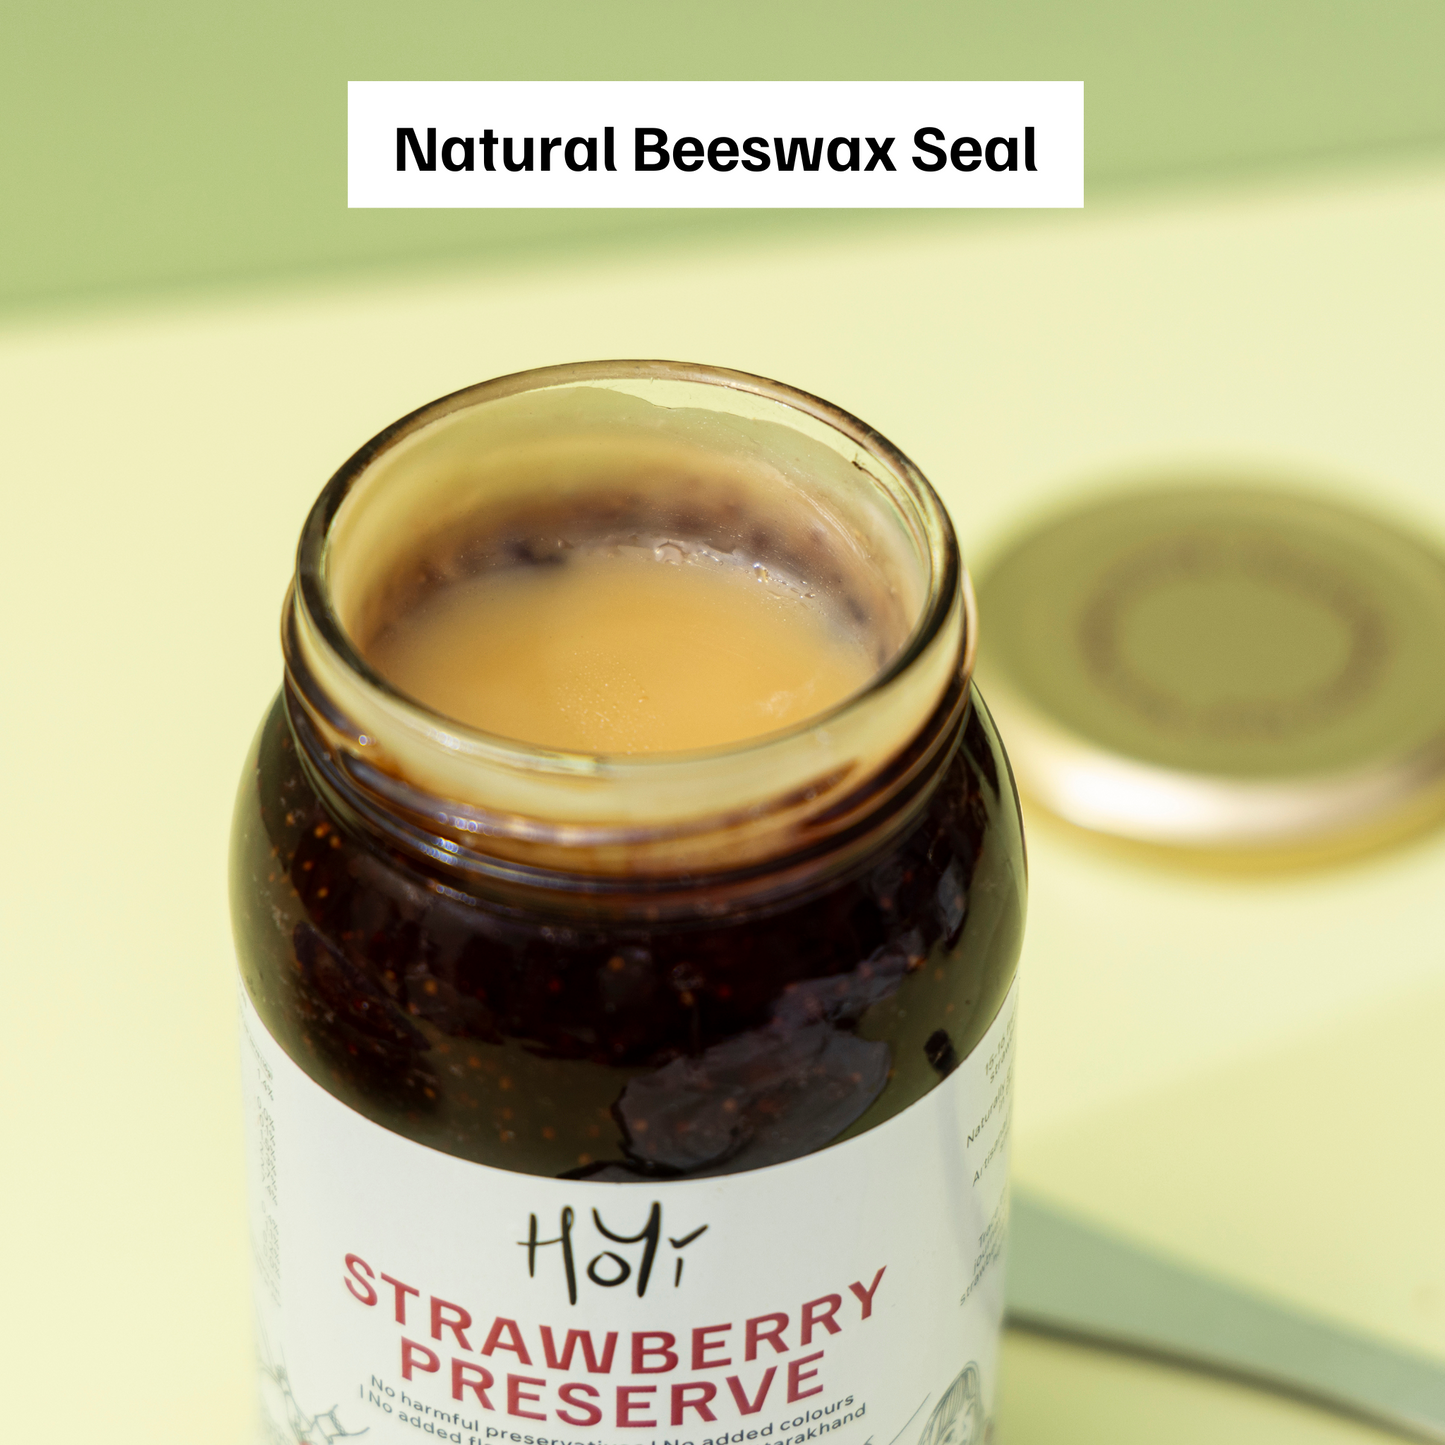 HoYi Strawberry Preserve (480gms) Handmade and Organic (Naturally sealed using beeswax)